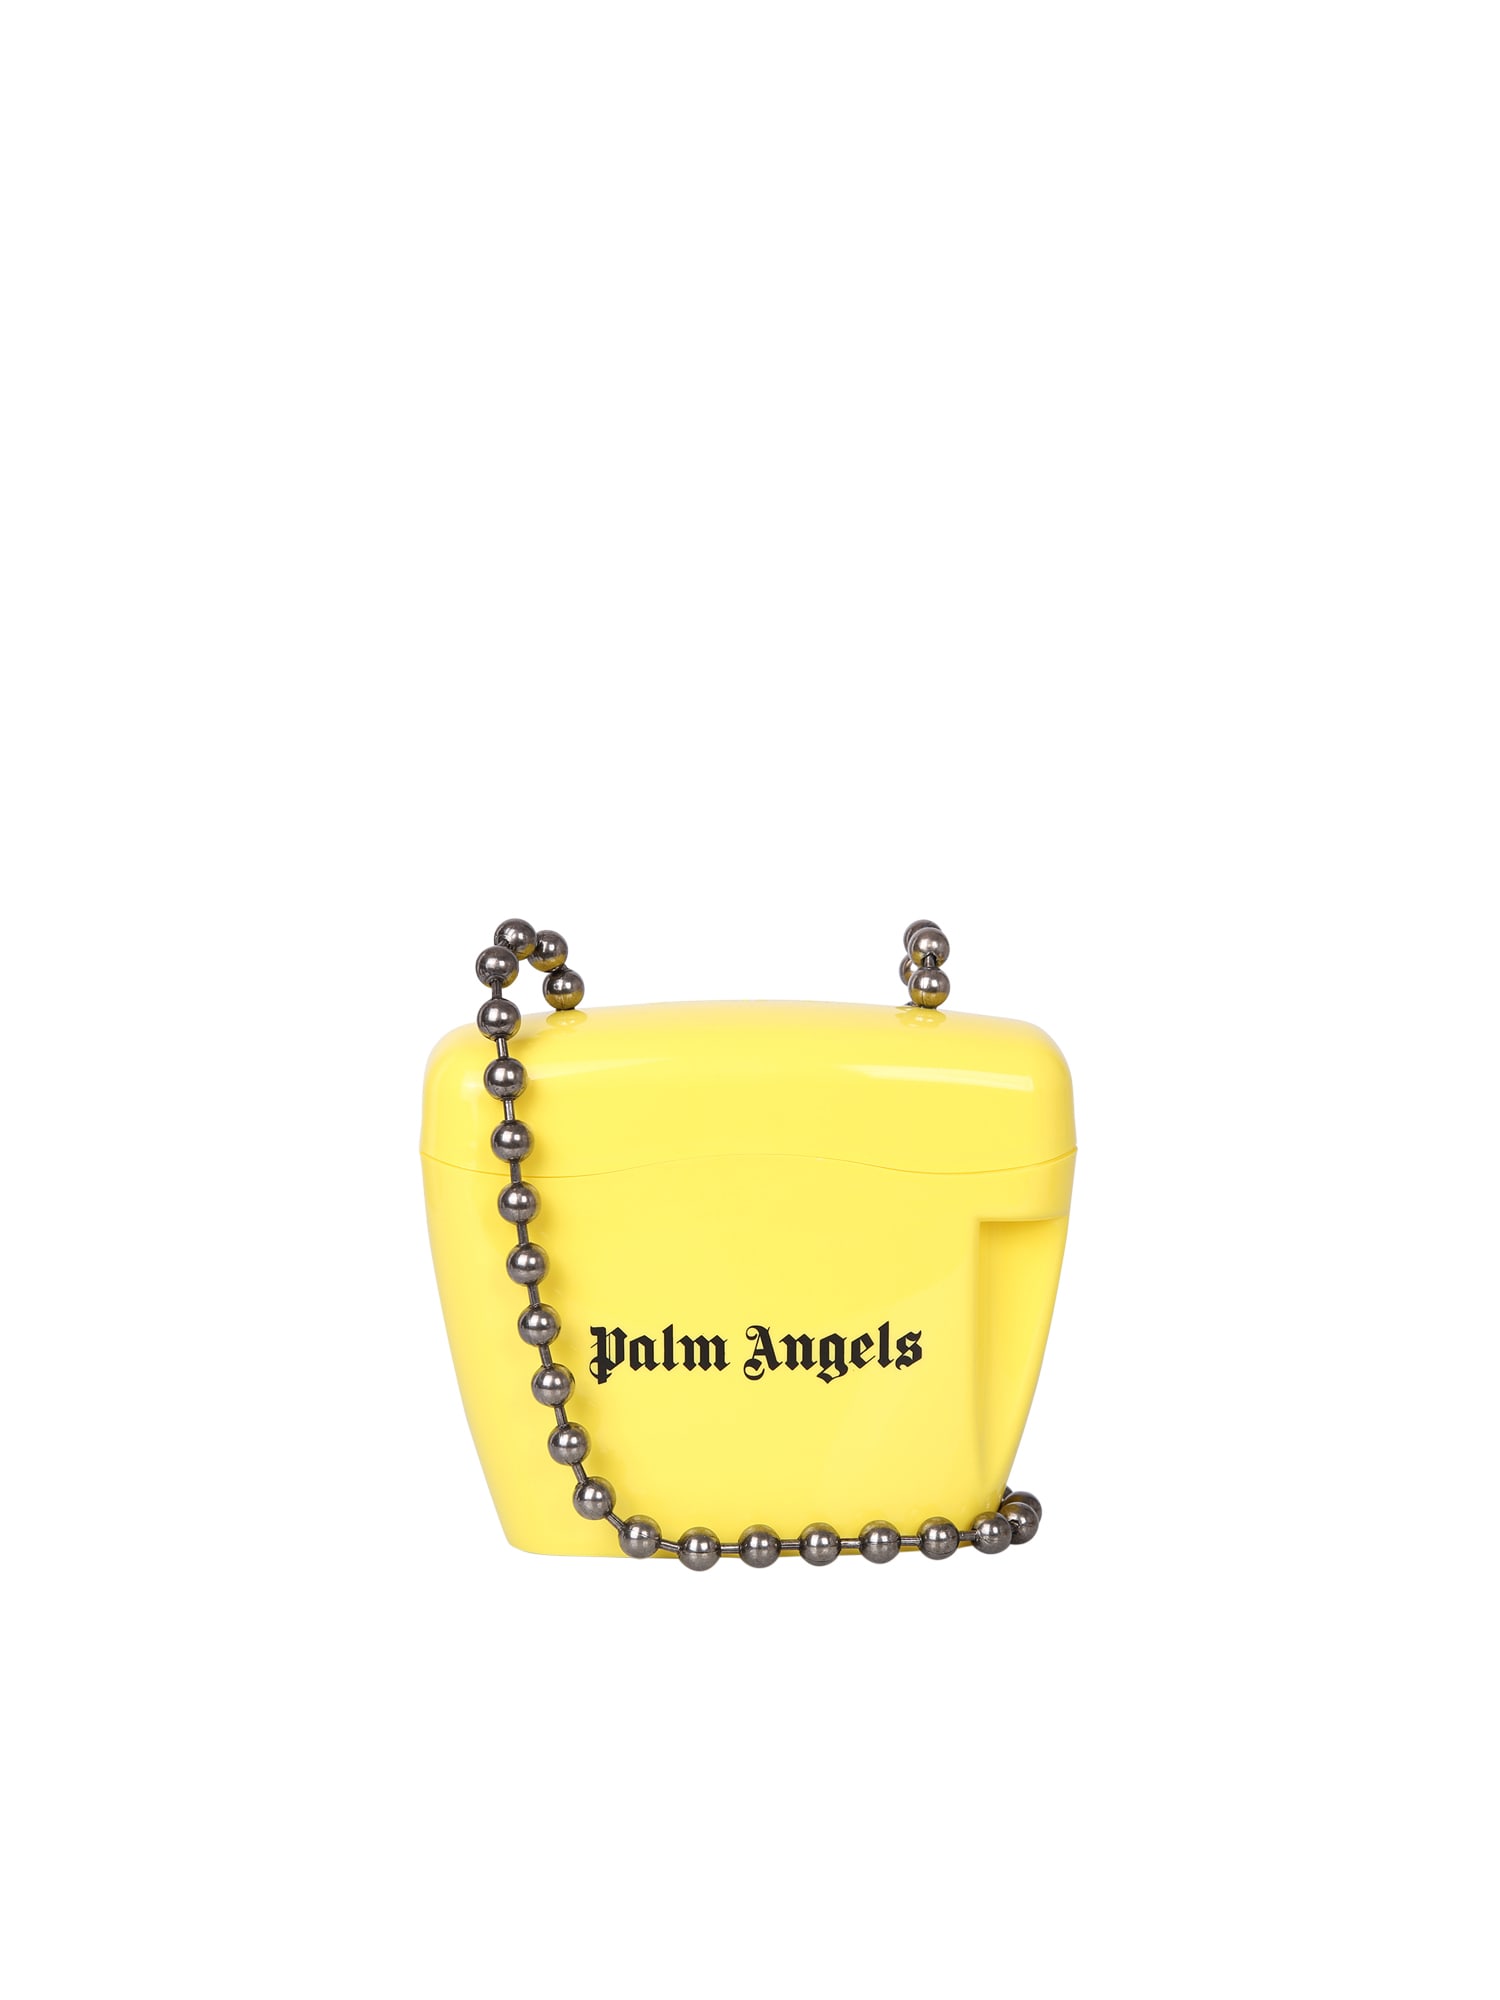 Palm Angels Padlock Bag In Yellow